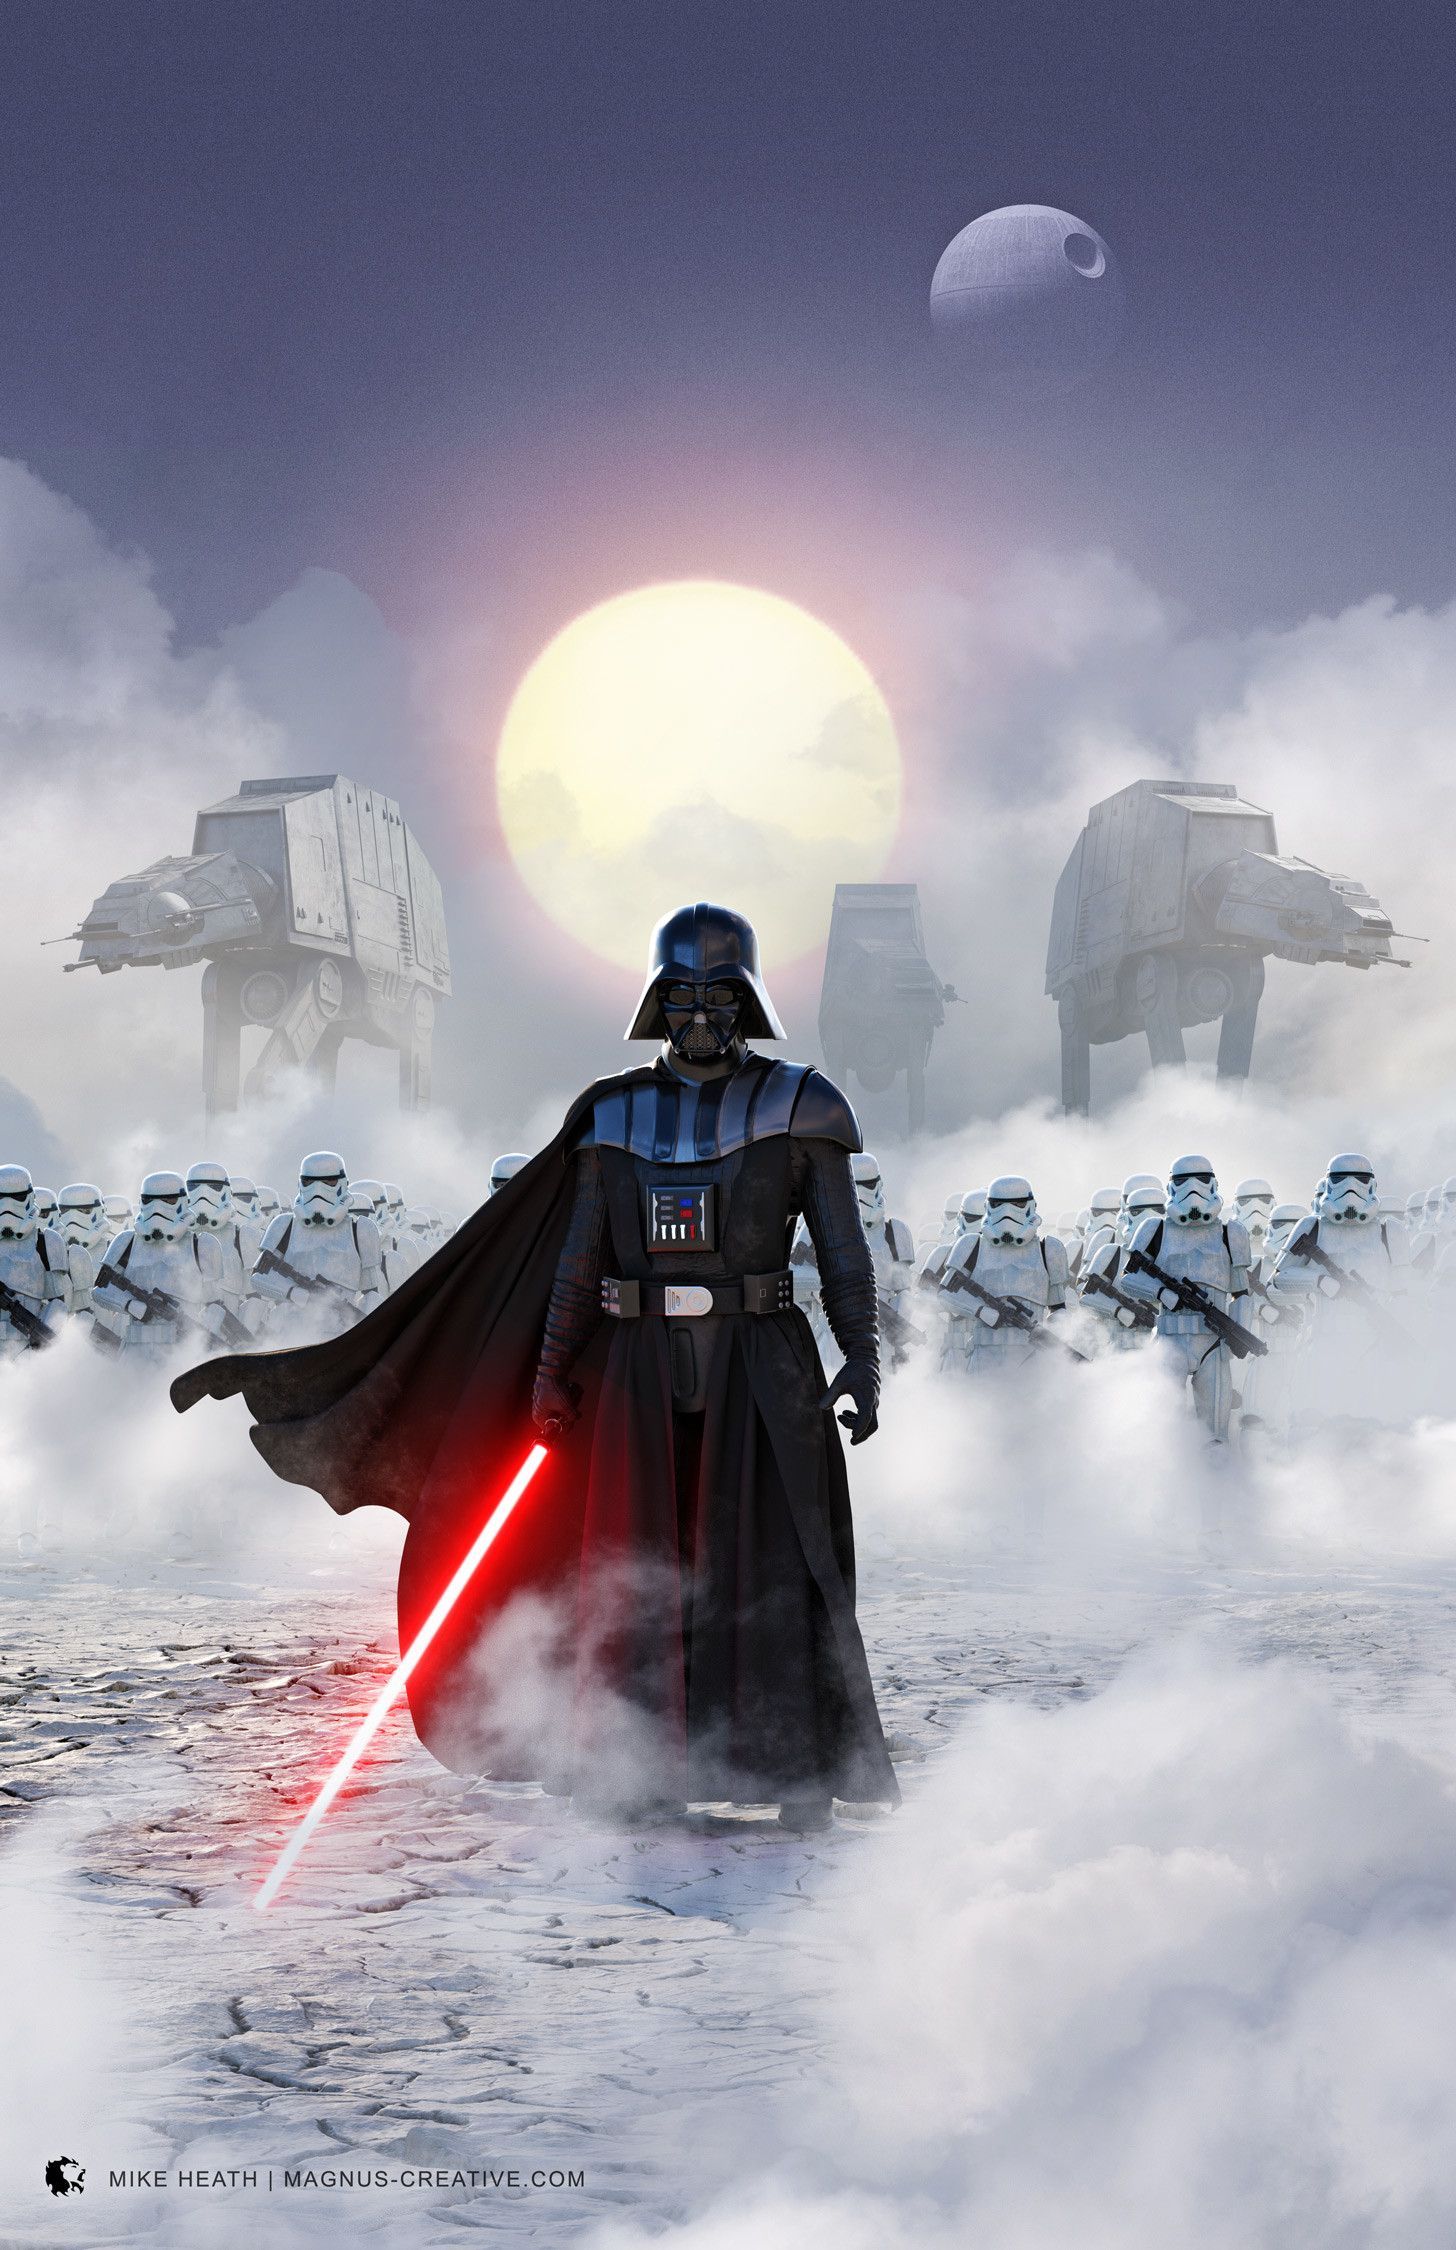 Best Legacy of Lord Vader image. Star wars art, Star wars, Darth vader